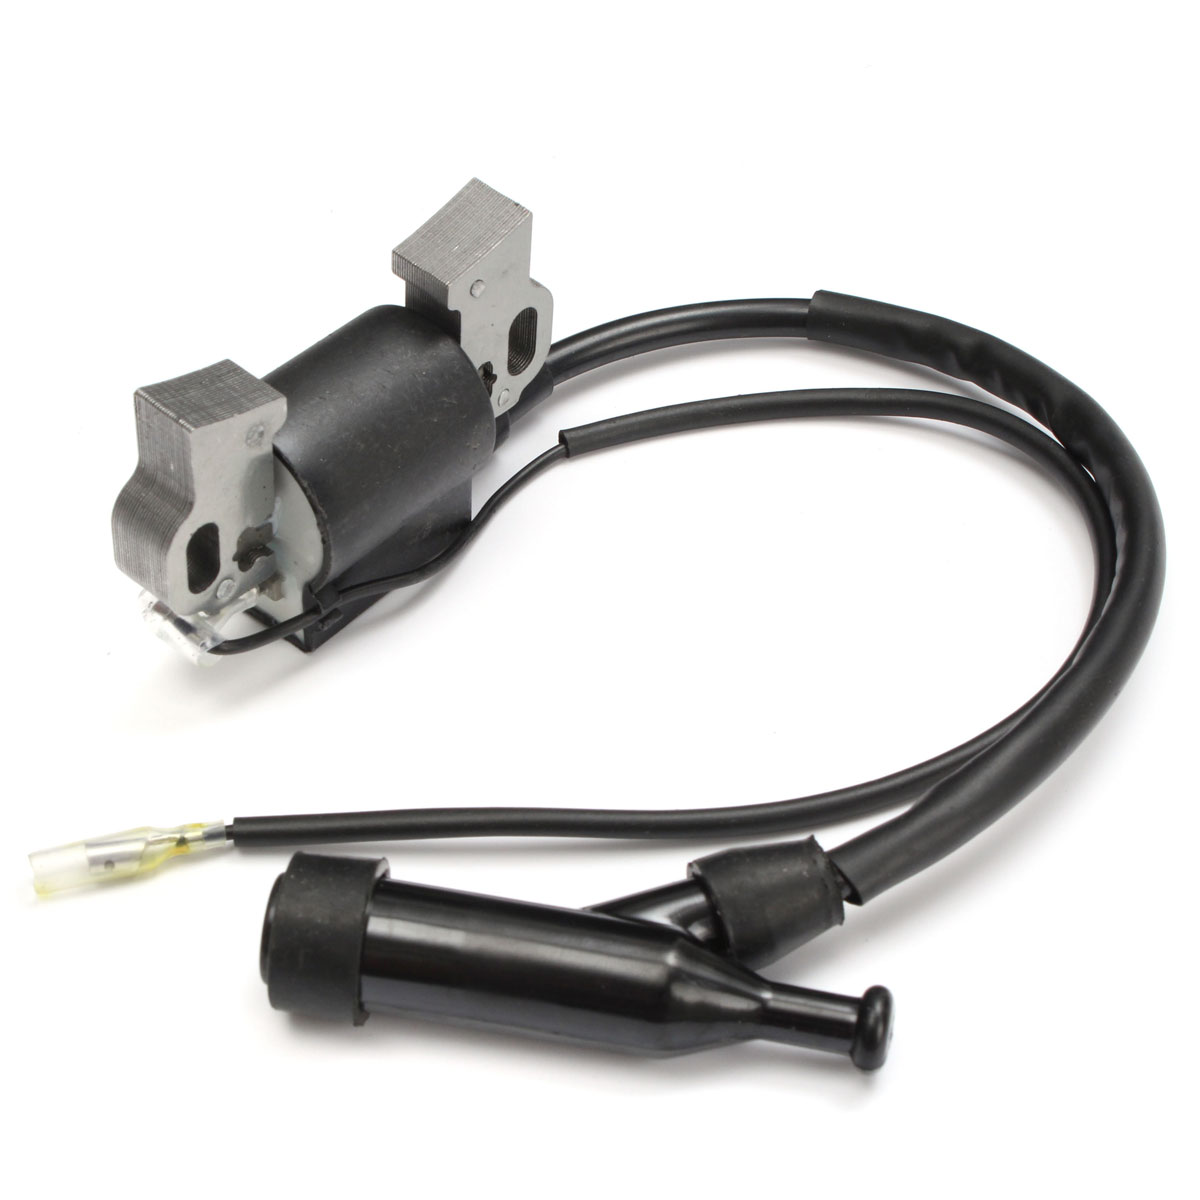 Carburetor Recoil Filter Ignition Coil Plug Kit for Honda GX340 11HP GX390 13HP - Auto GoShop